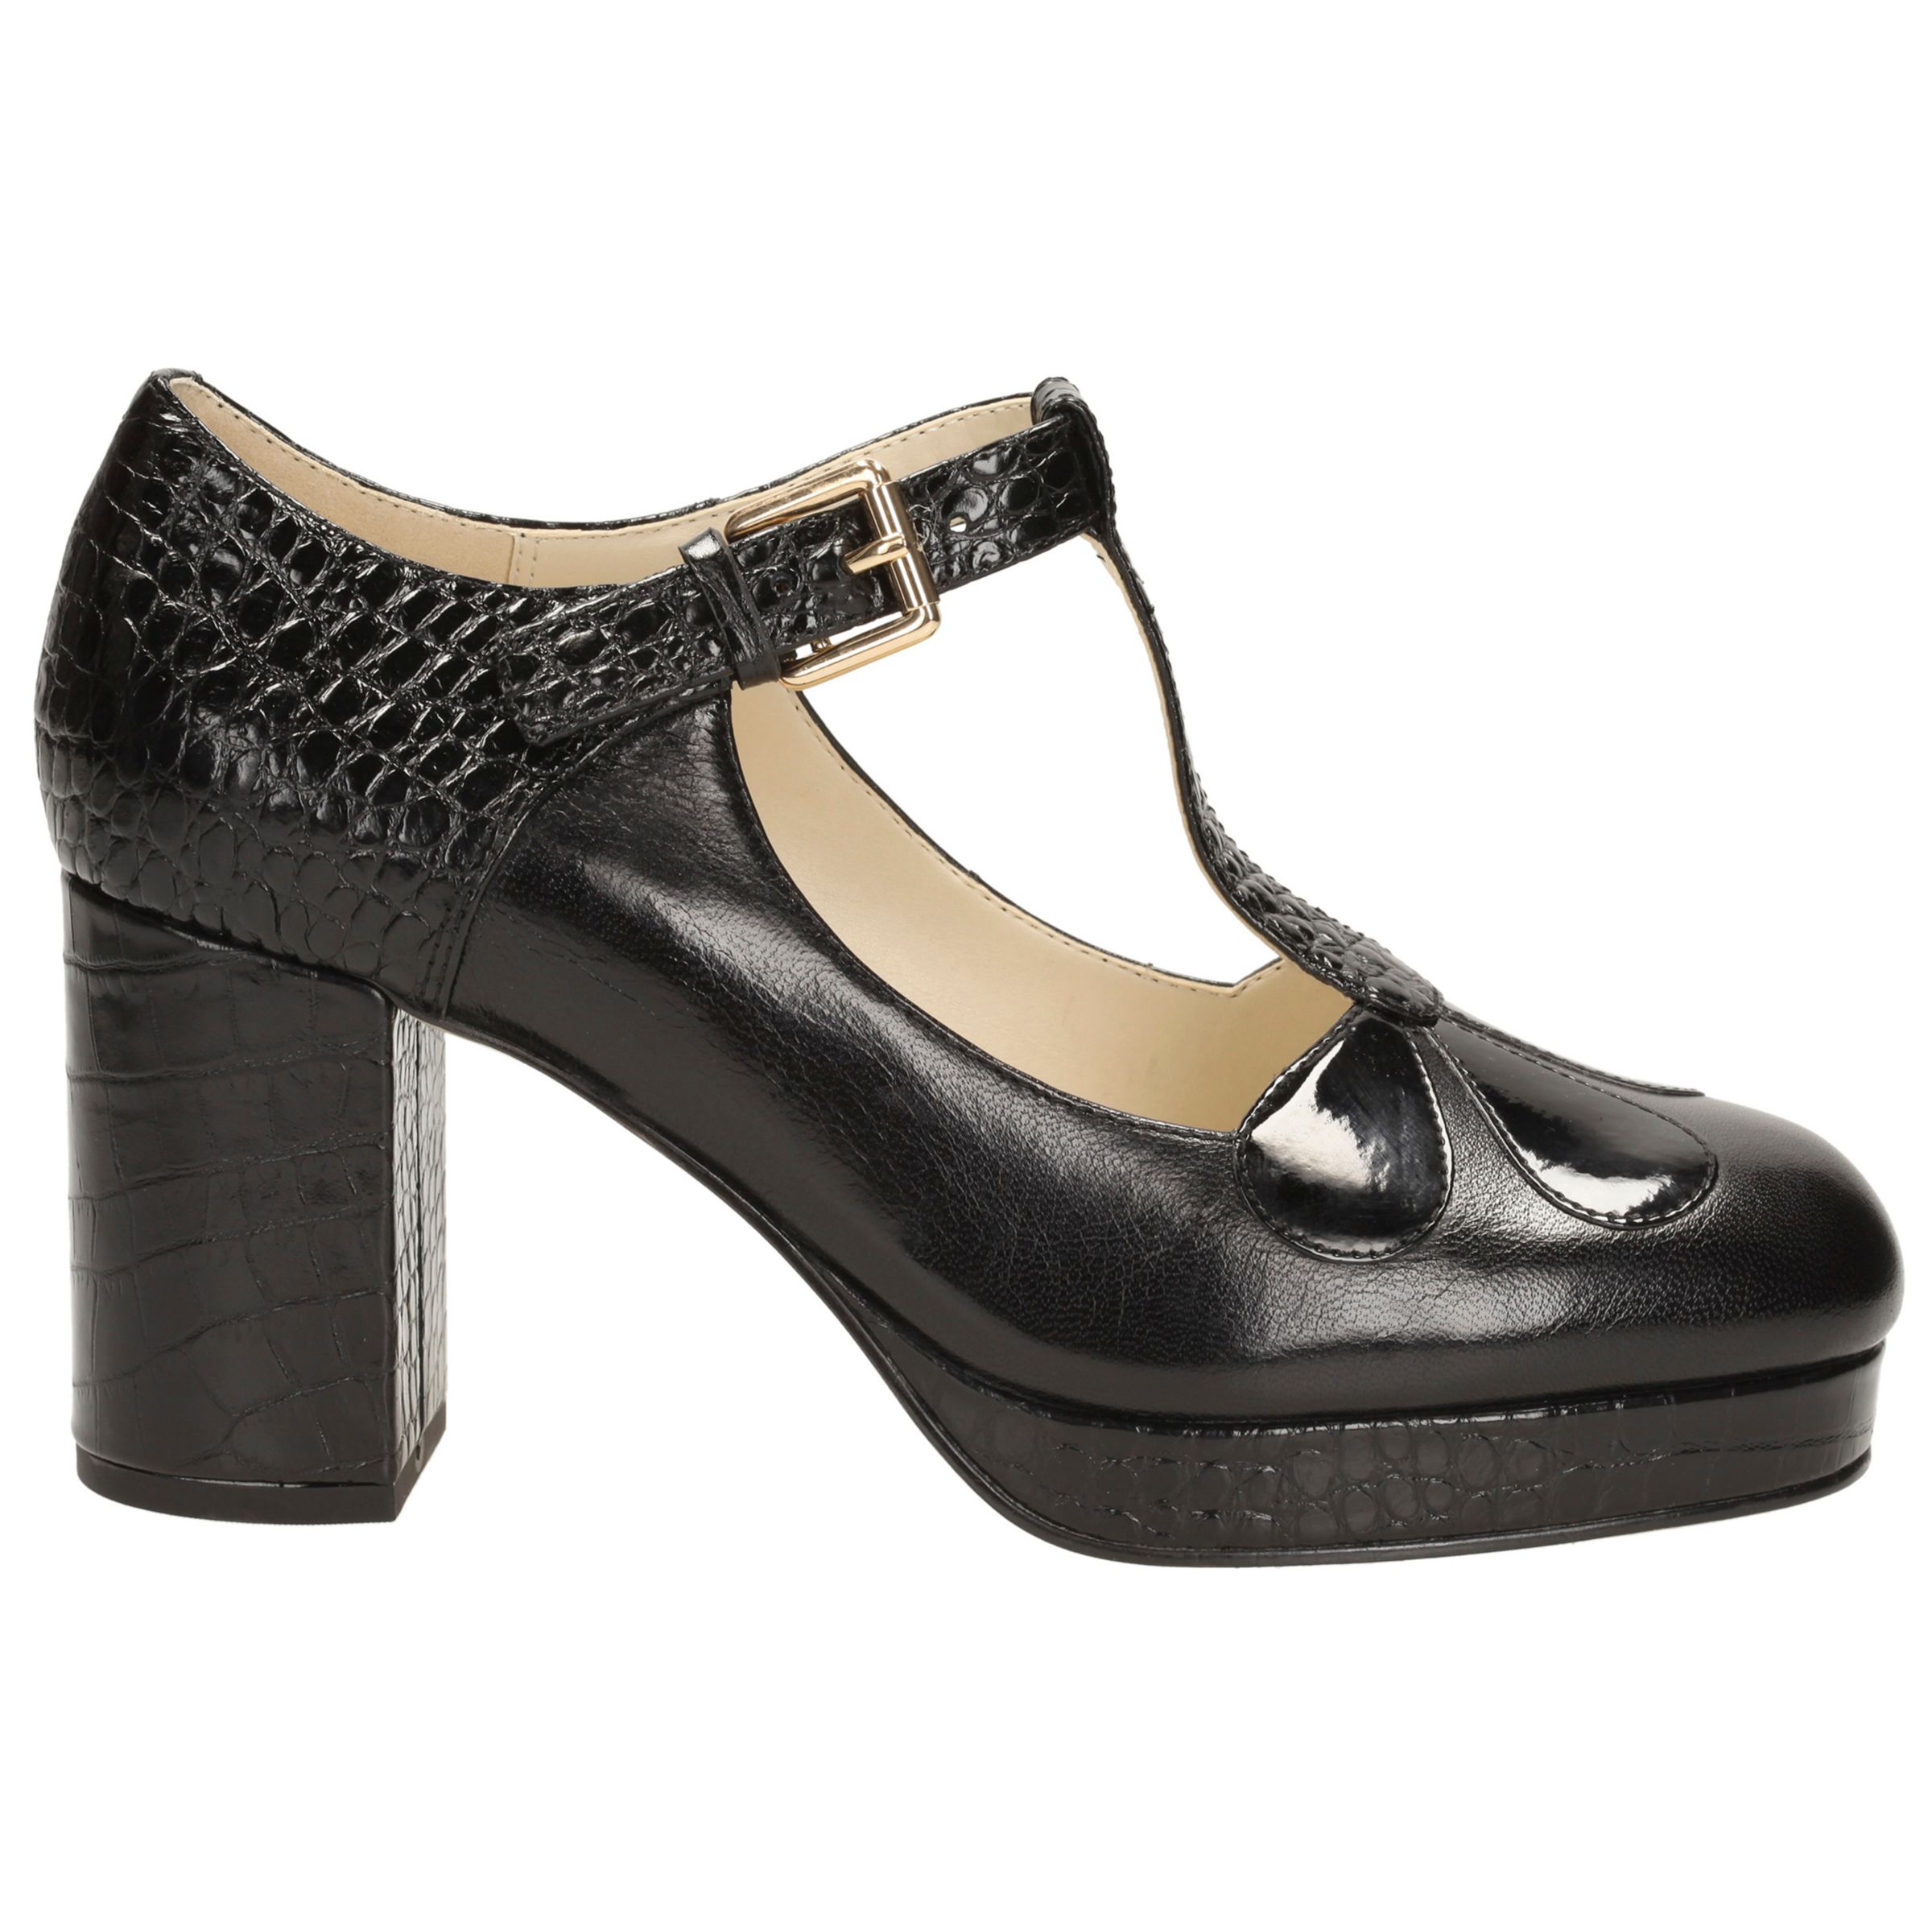 Clarks Orla Kiely Abigail Leather T-Bar Platform Shoes, Black